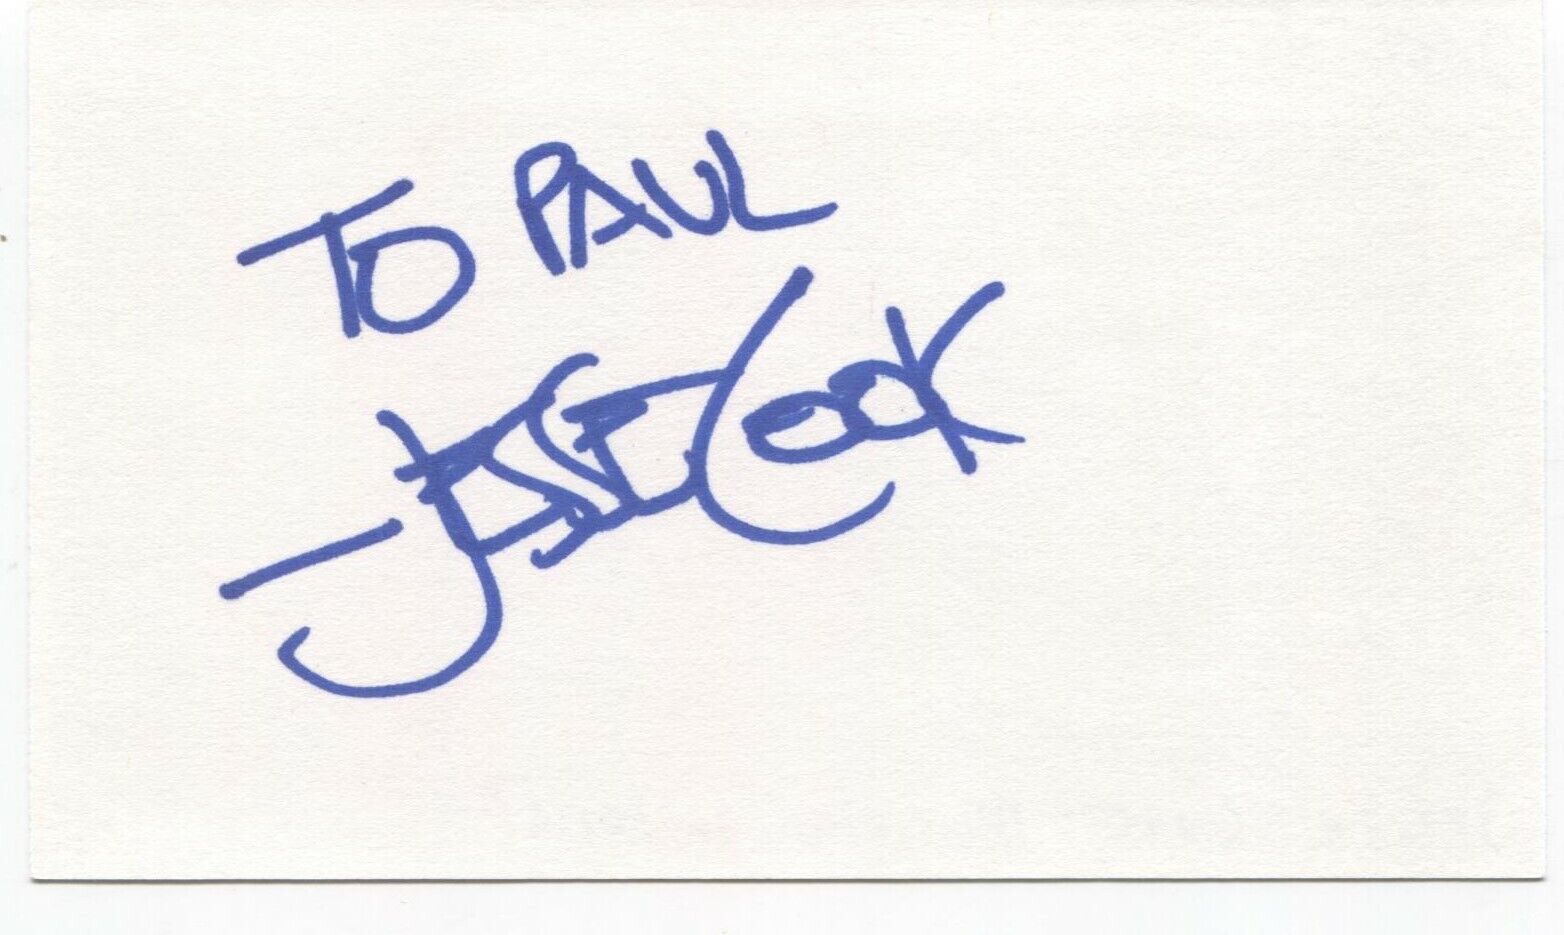 Jesse Cook Signed 3x5 Index Card Autographed Signature Musician Singer